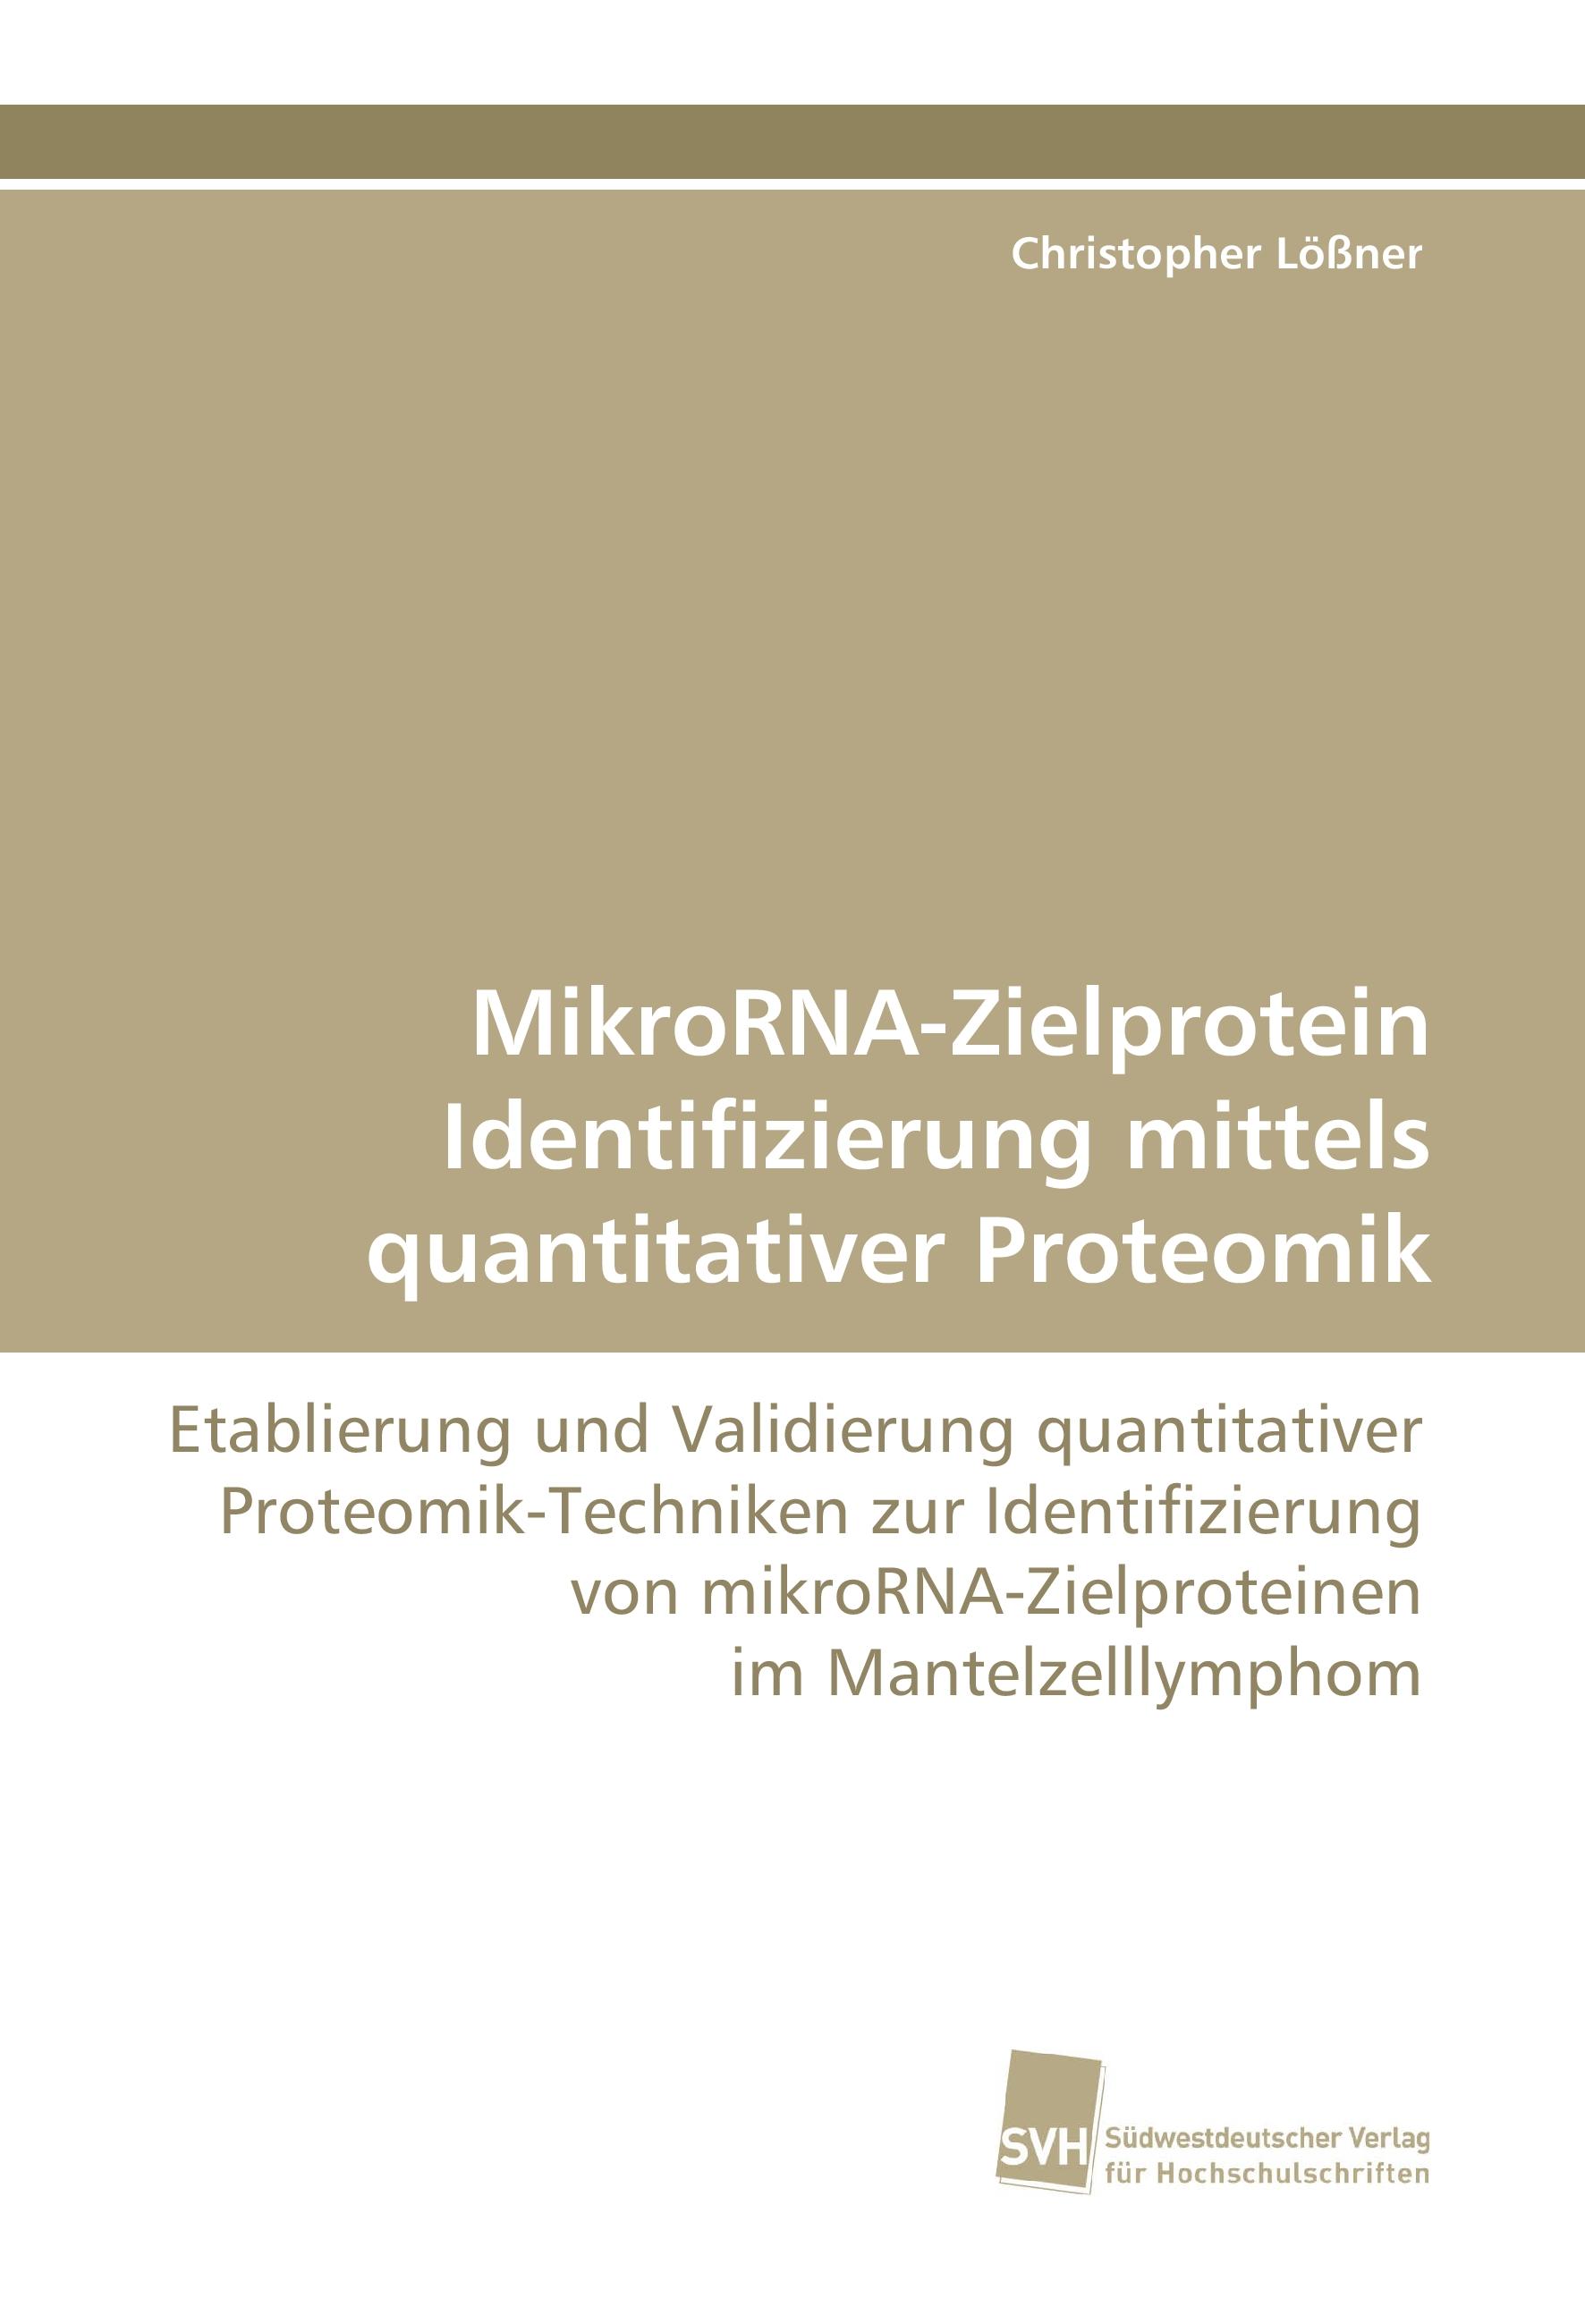 MikroRNA-Zielprotein Identifizierung mittels quantitativer Proteomik - Christopher Lößner